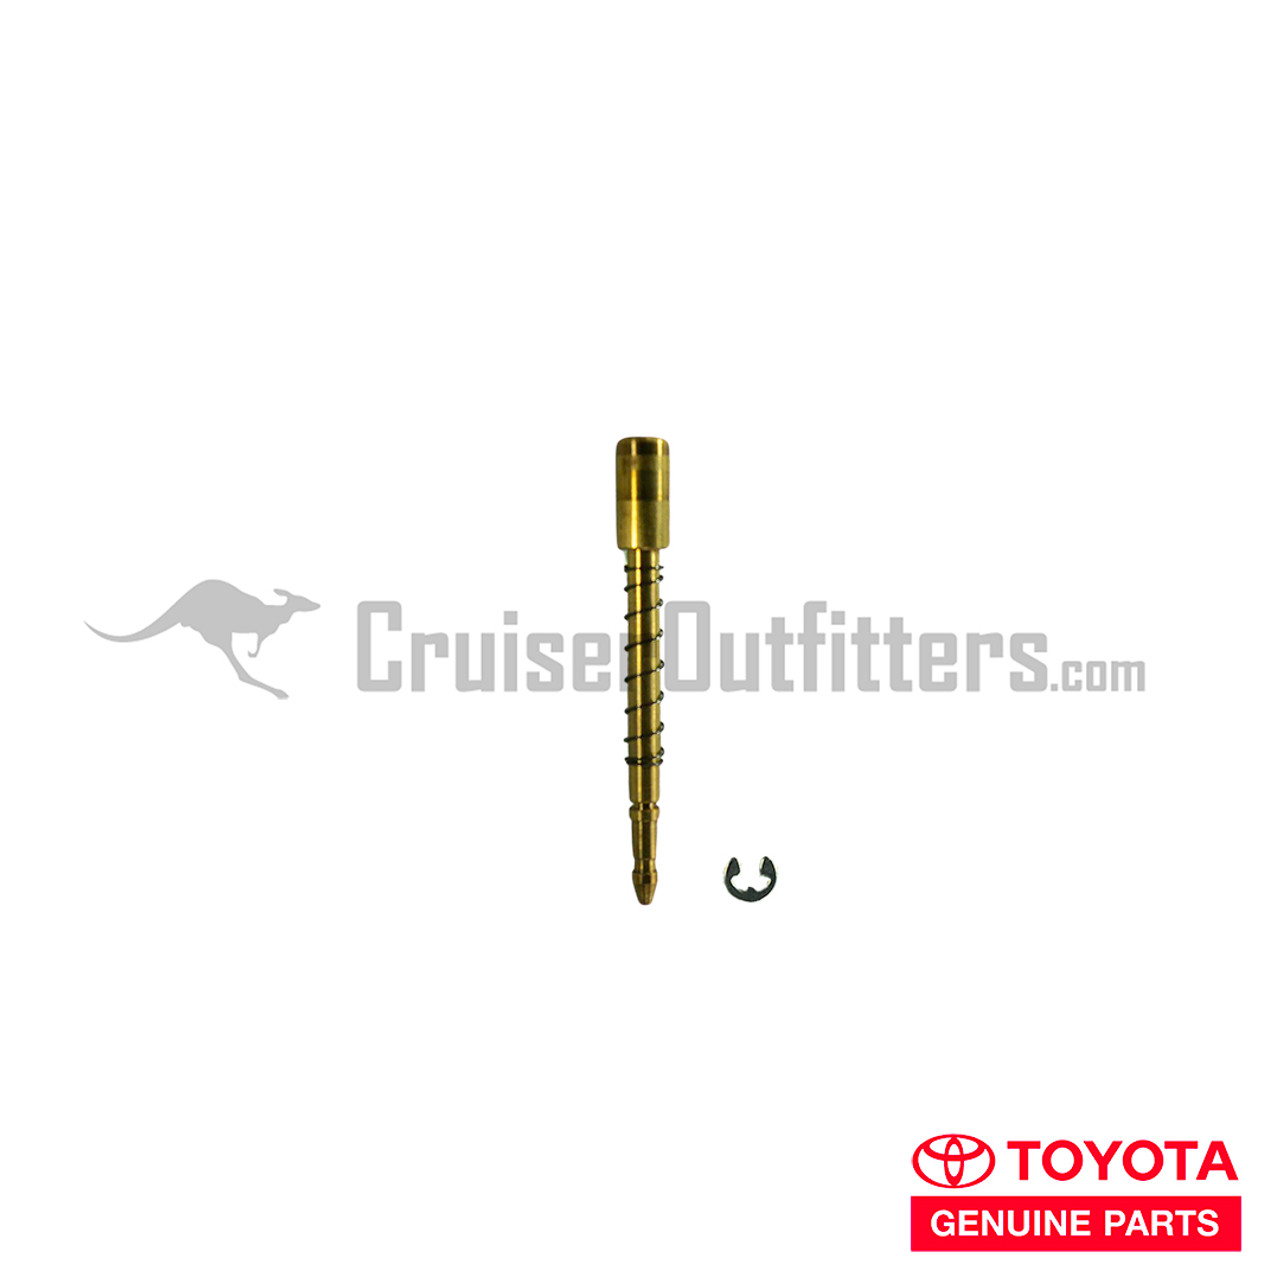 Horn Contact Kit - OEM Toyota - Fits 7x Series (ELEC32010)